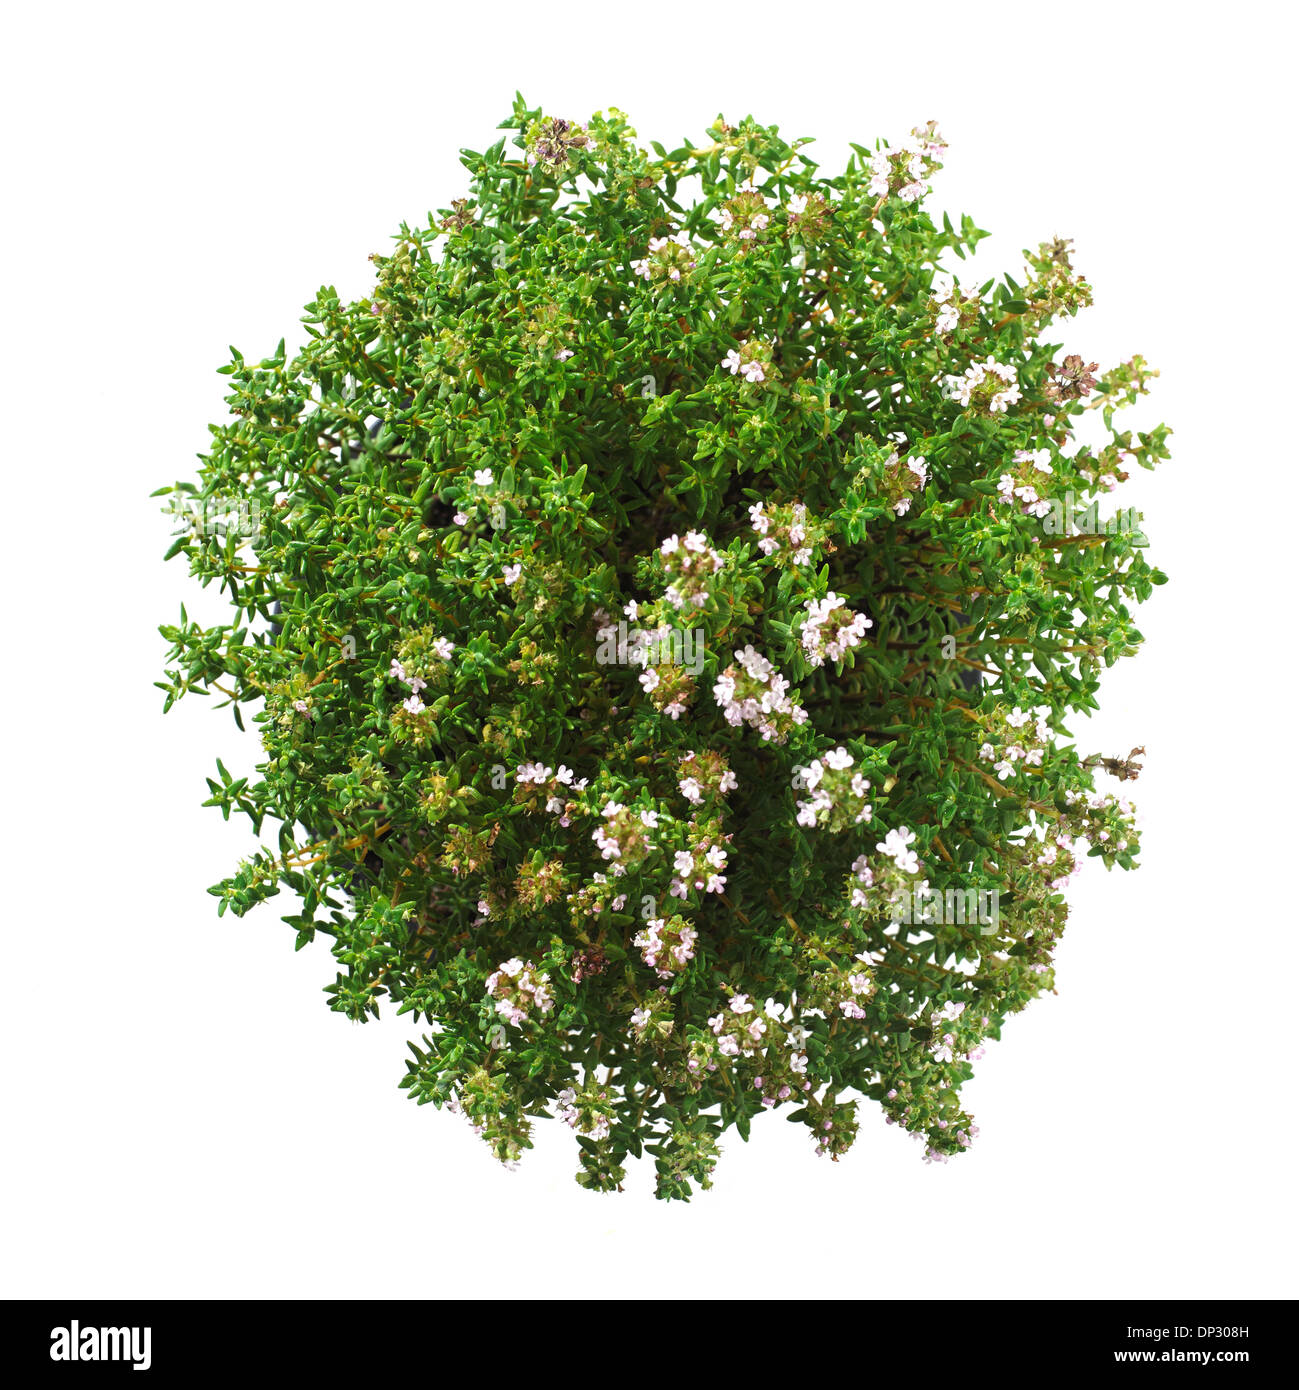 Thyme Thymus vulgaris plant Stock Photo